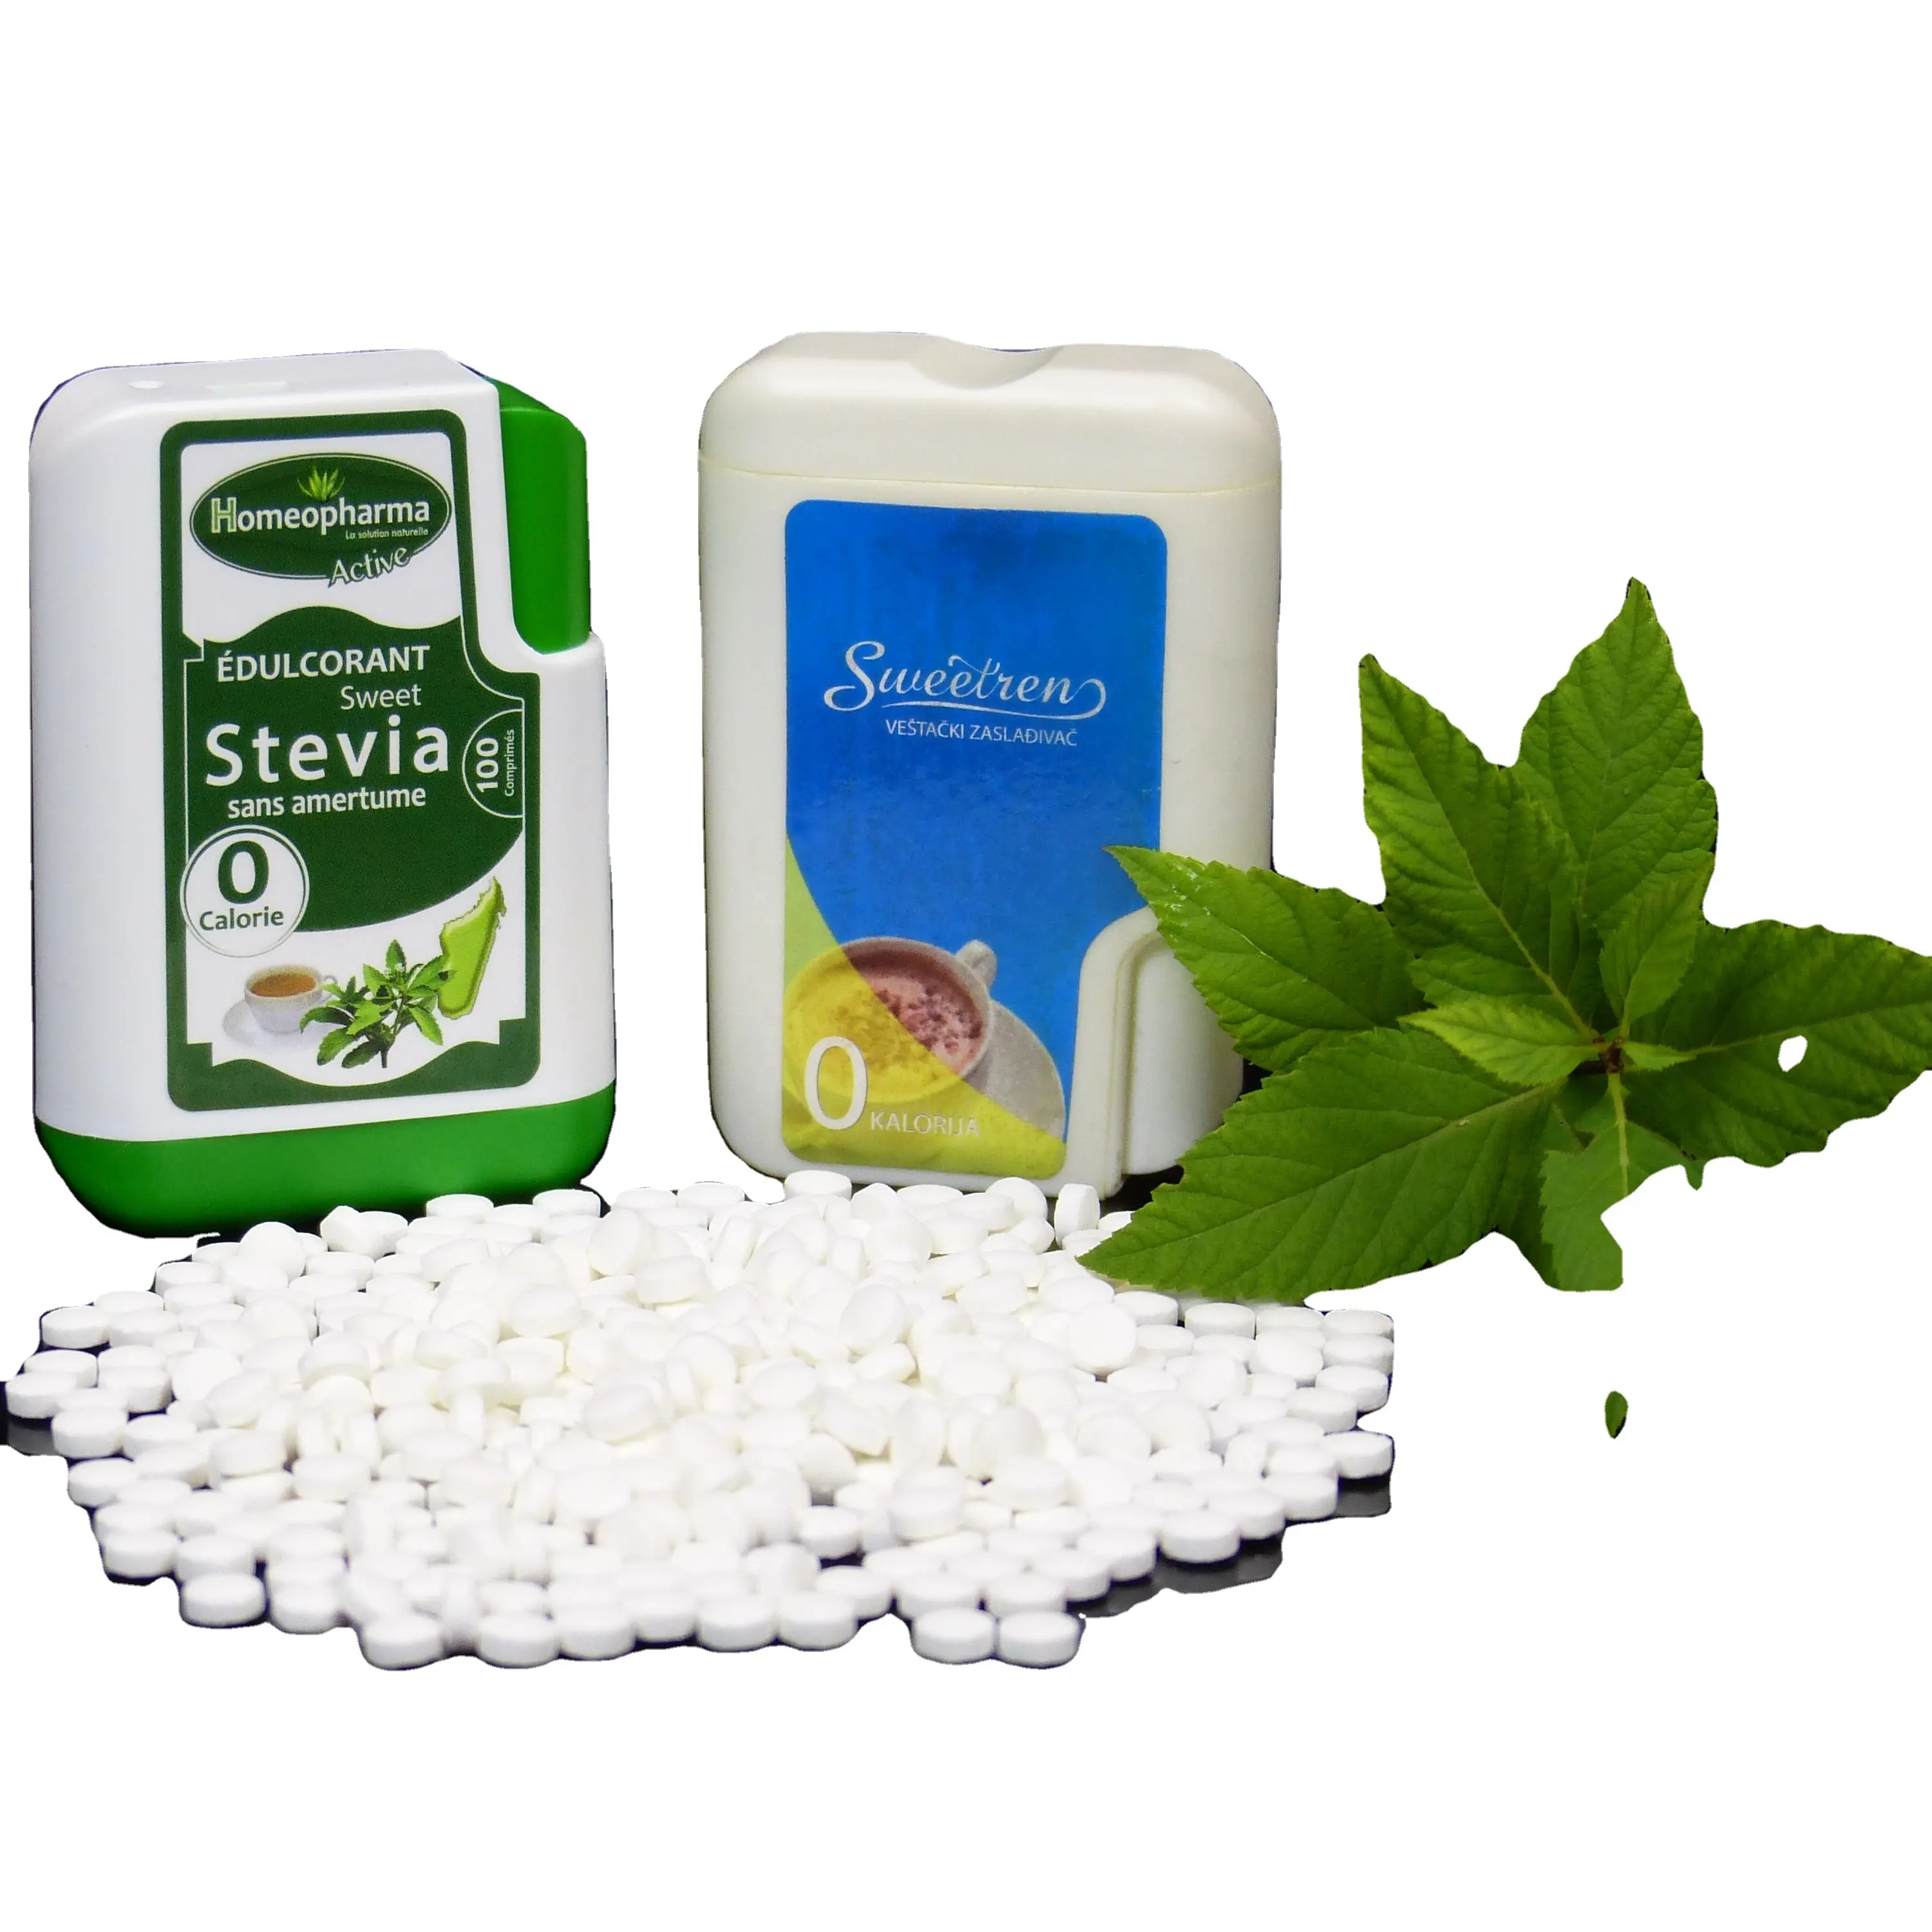 1 tablet = 1 tsp sugar Tabletop Stevia Saccharin instant tablet sweetener in bulk or OEM finished dispenser